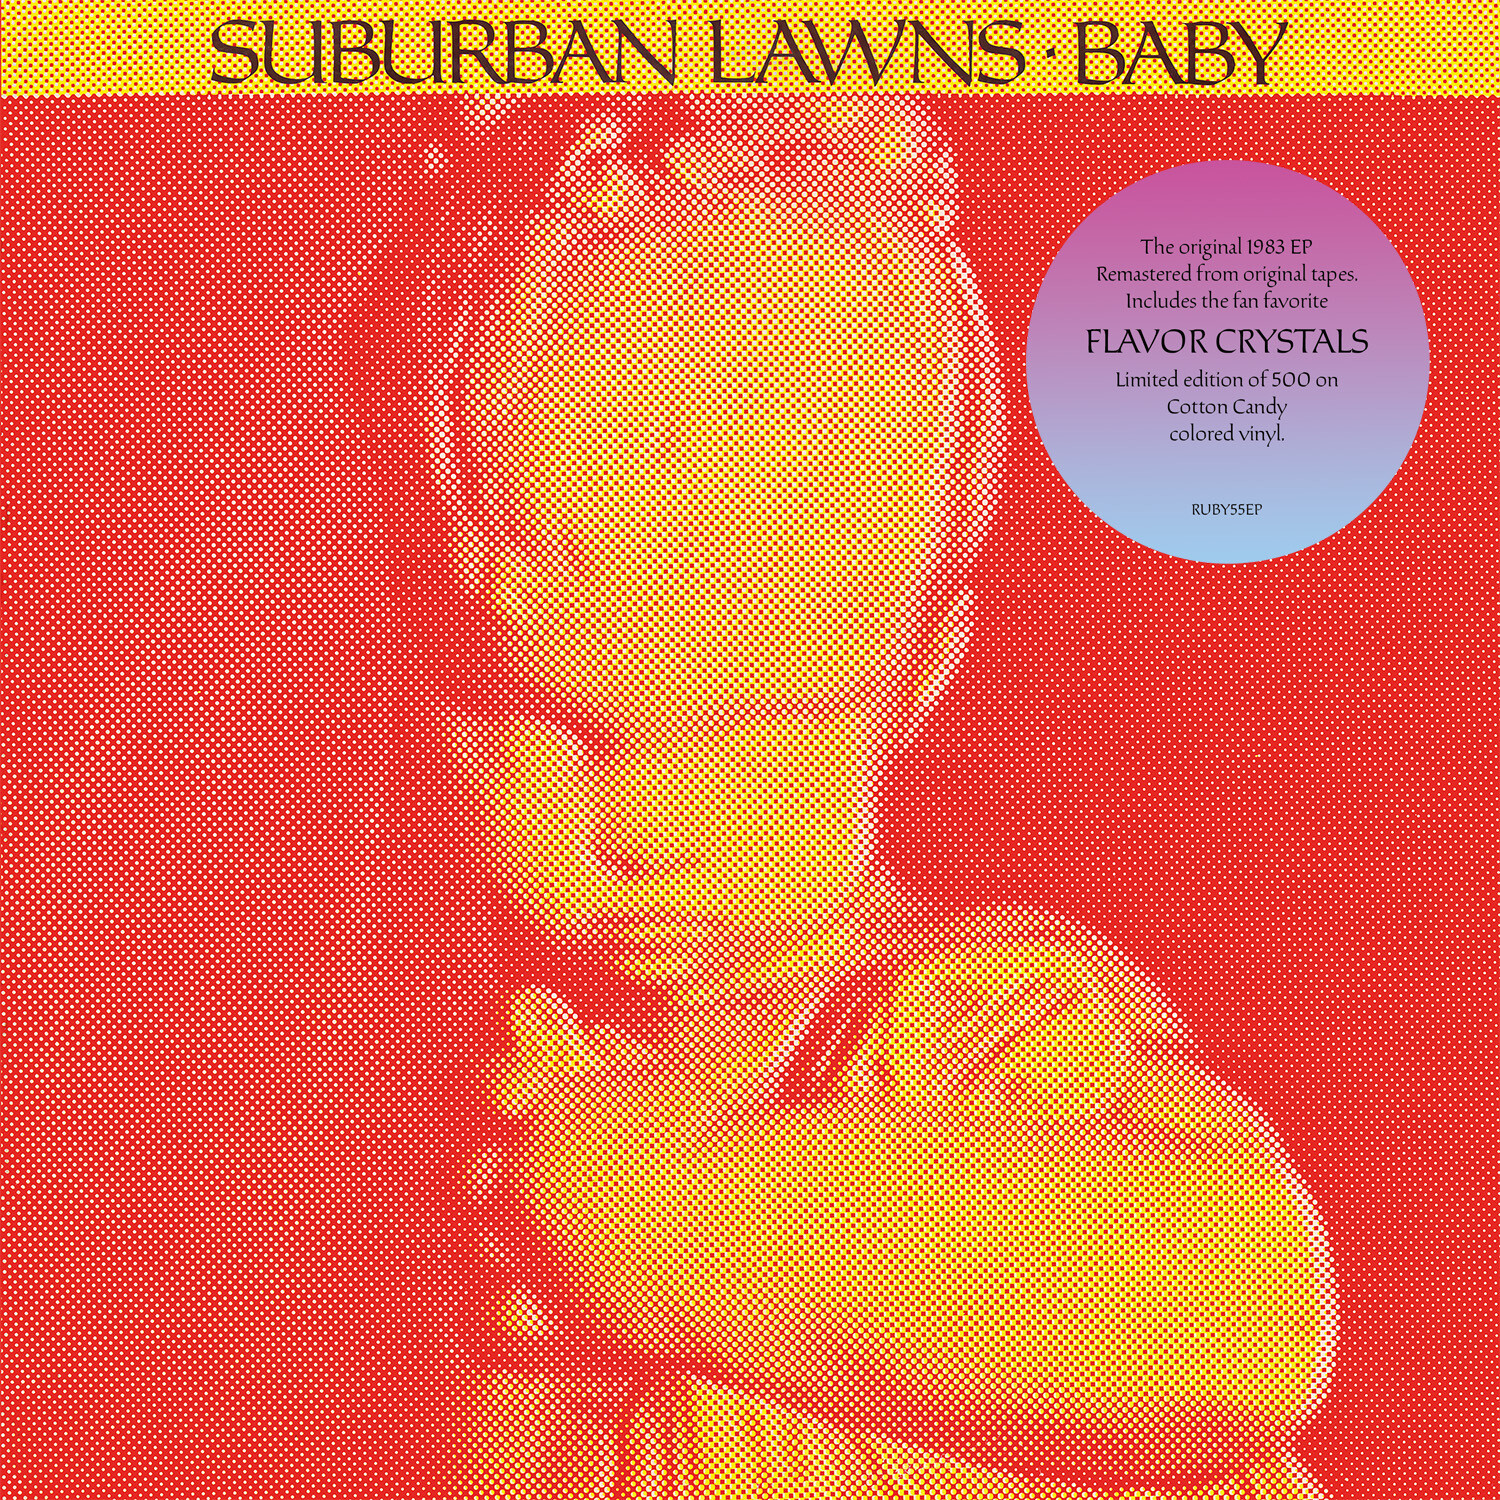 Suburban Lawns / Baby EP: Cotton Candy vinyl